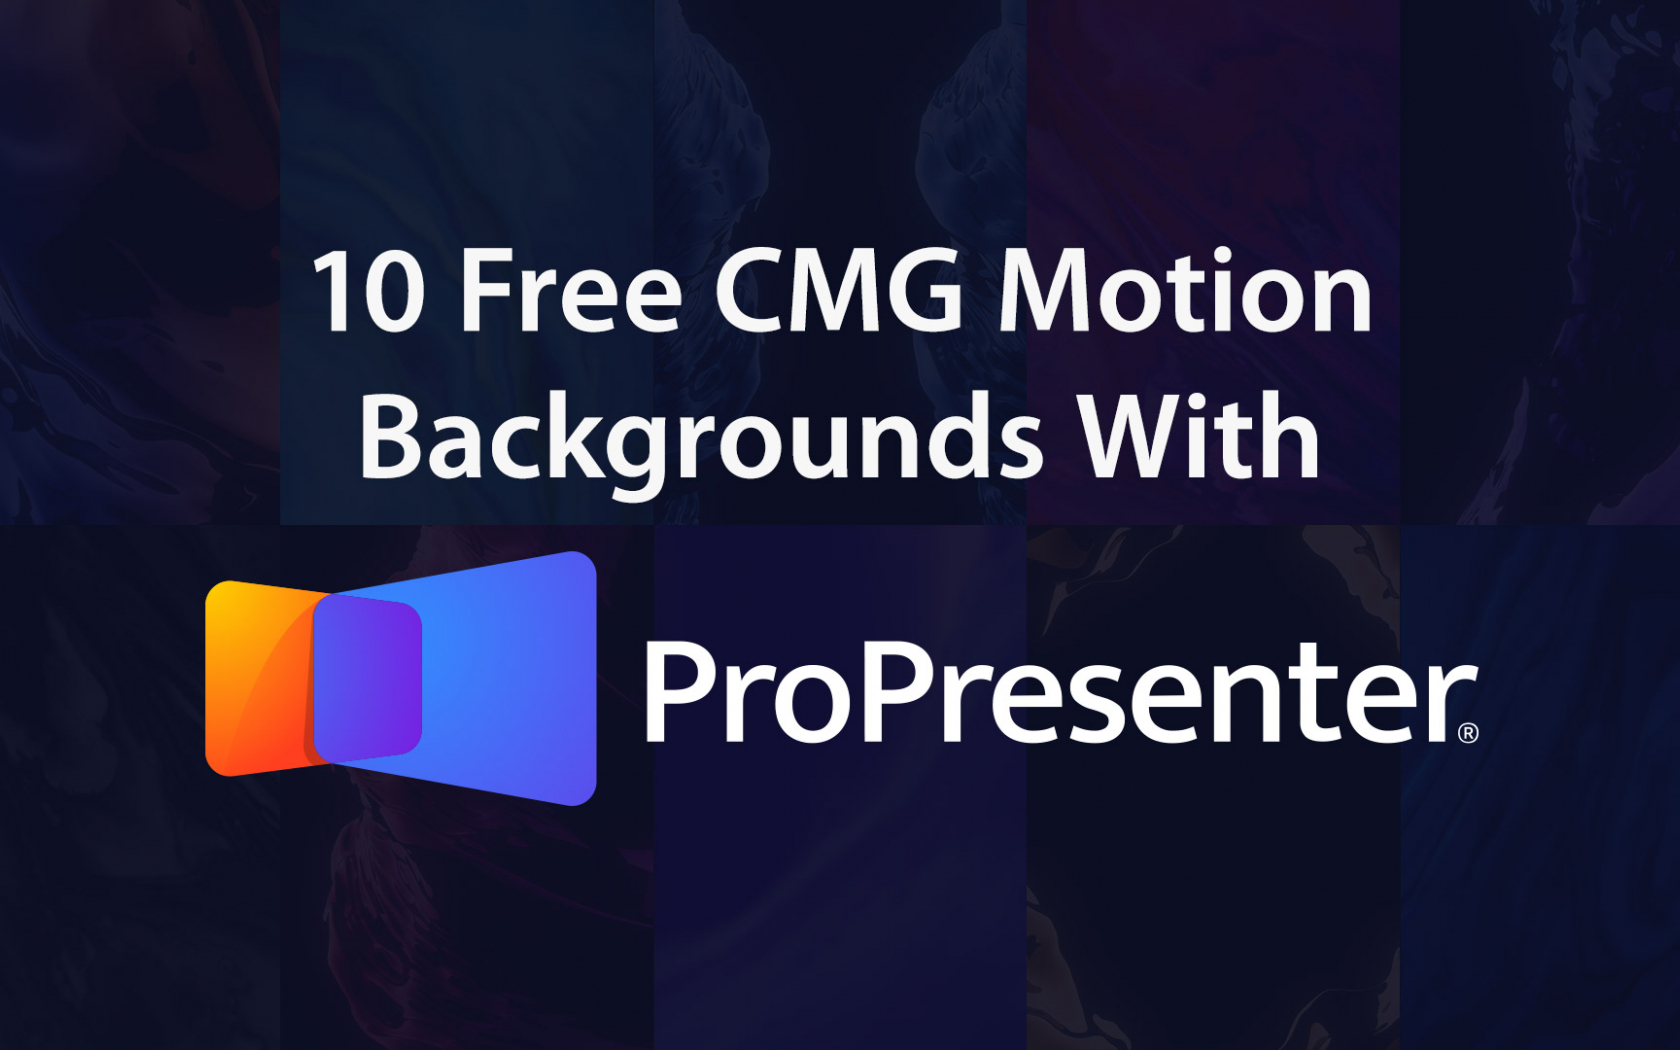 propresenter motion background free